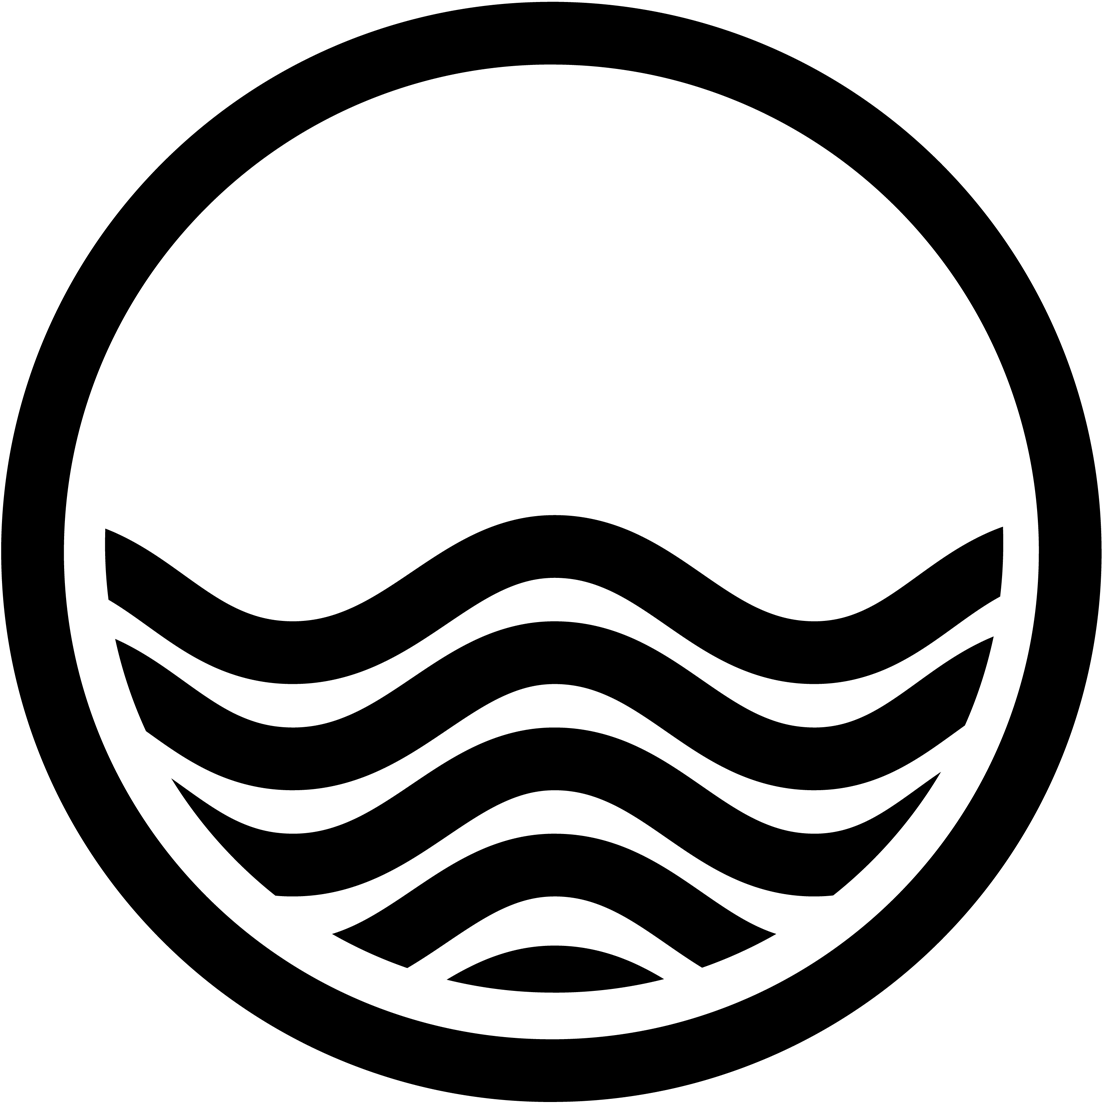 White Wave Logo - Pin by Kevin Wang on Typography & Design | Pinterest | Logo design ...